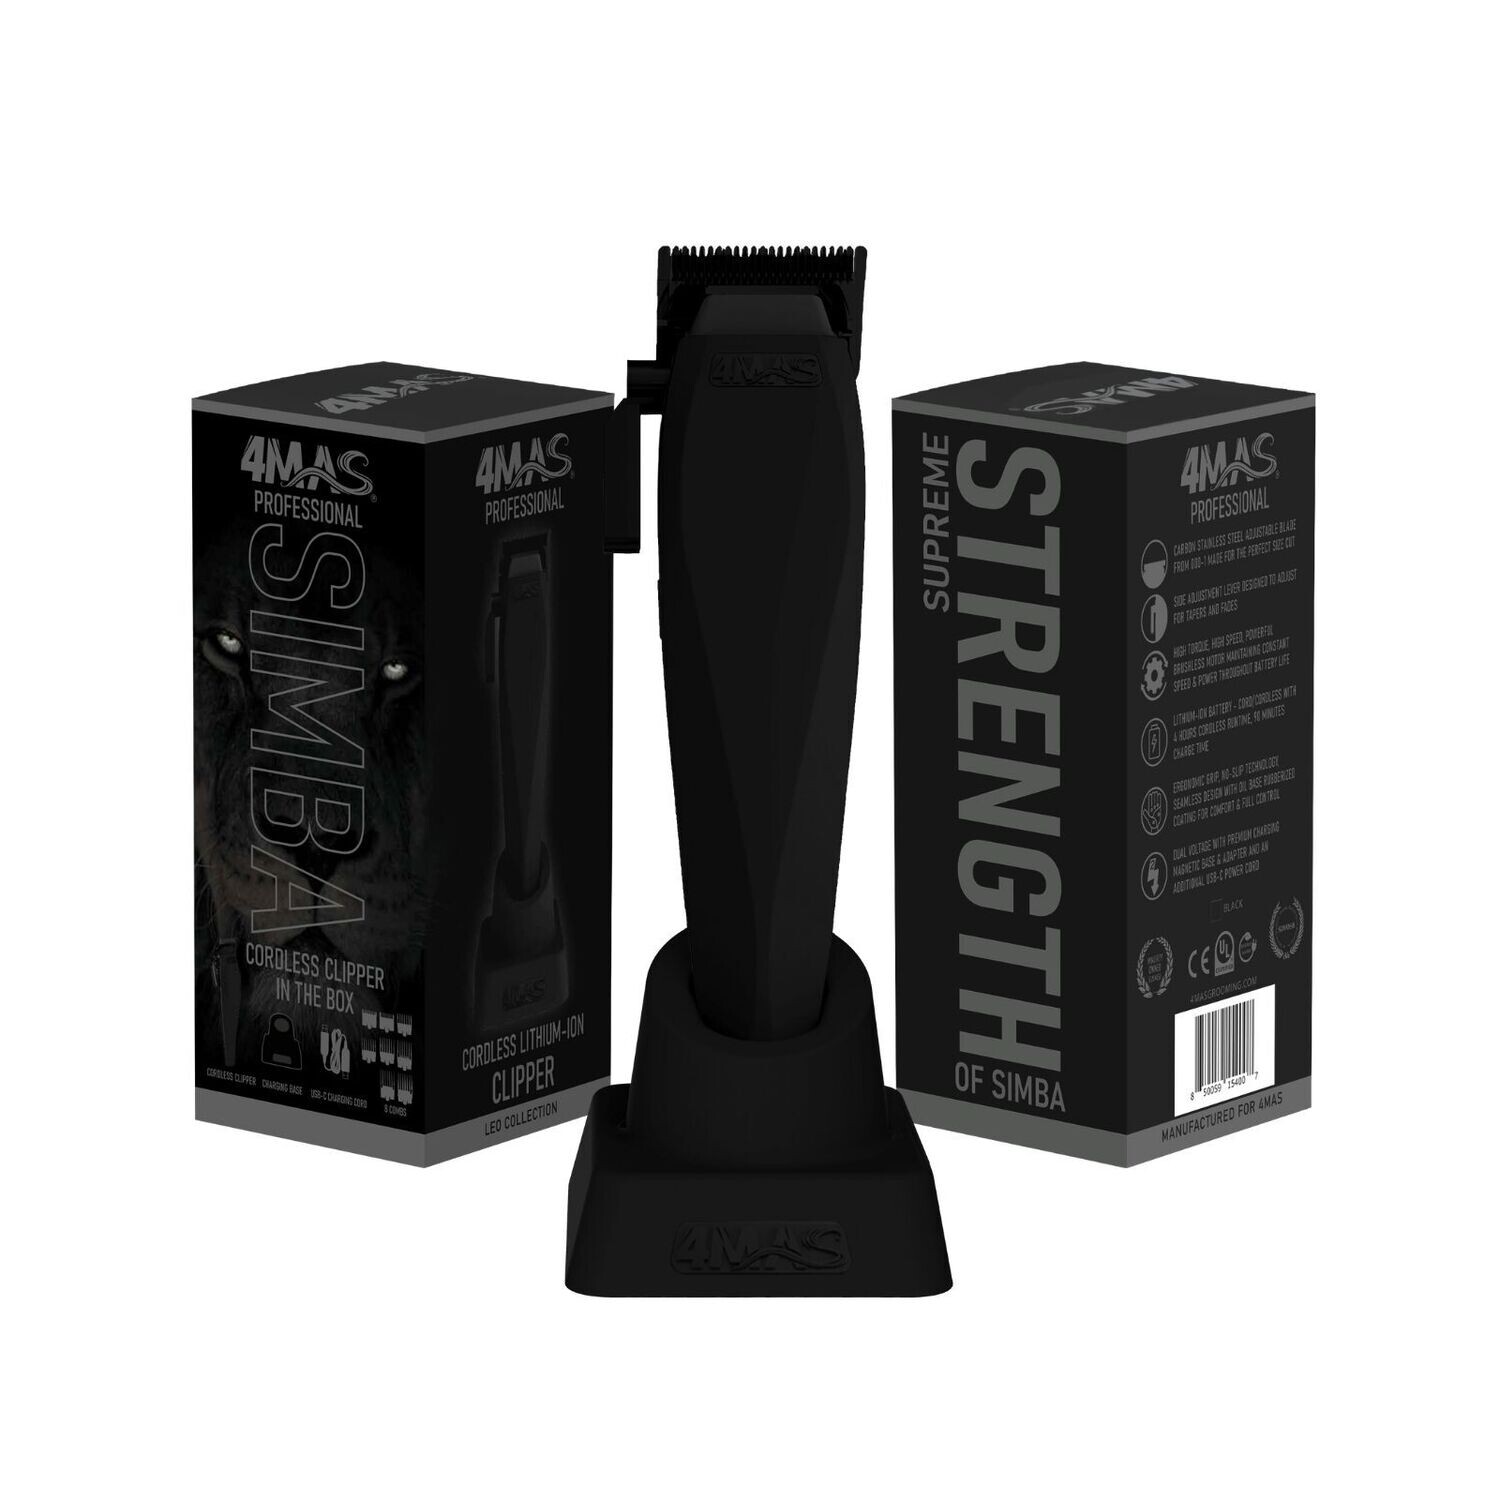 4MAS Simba Cordless Clipper 2.0 (Black)